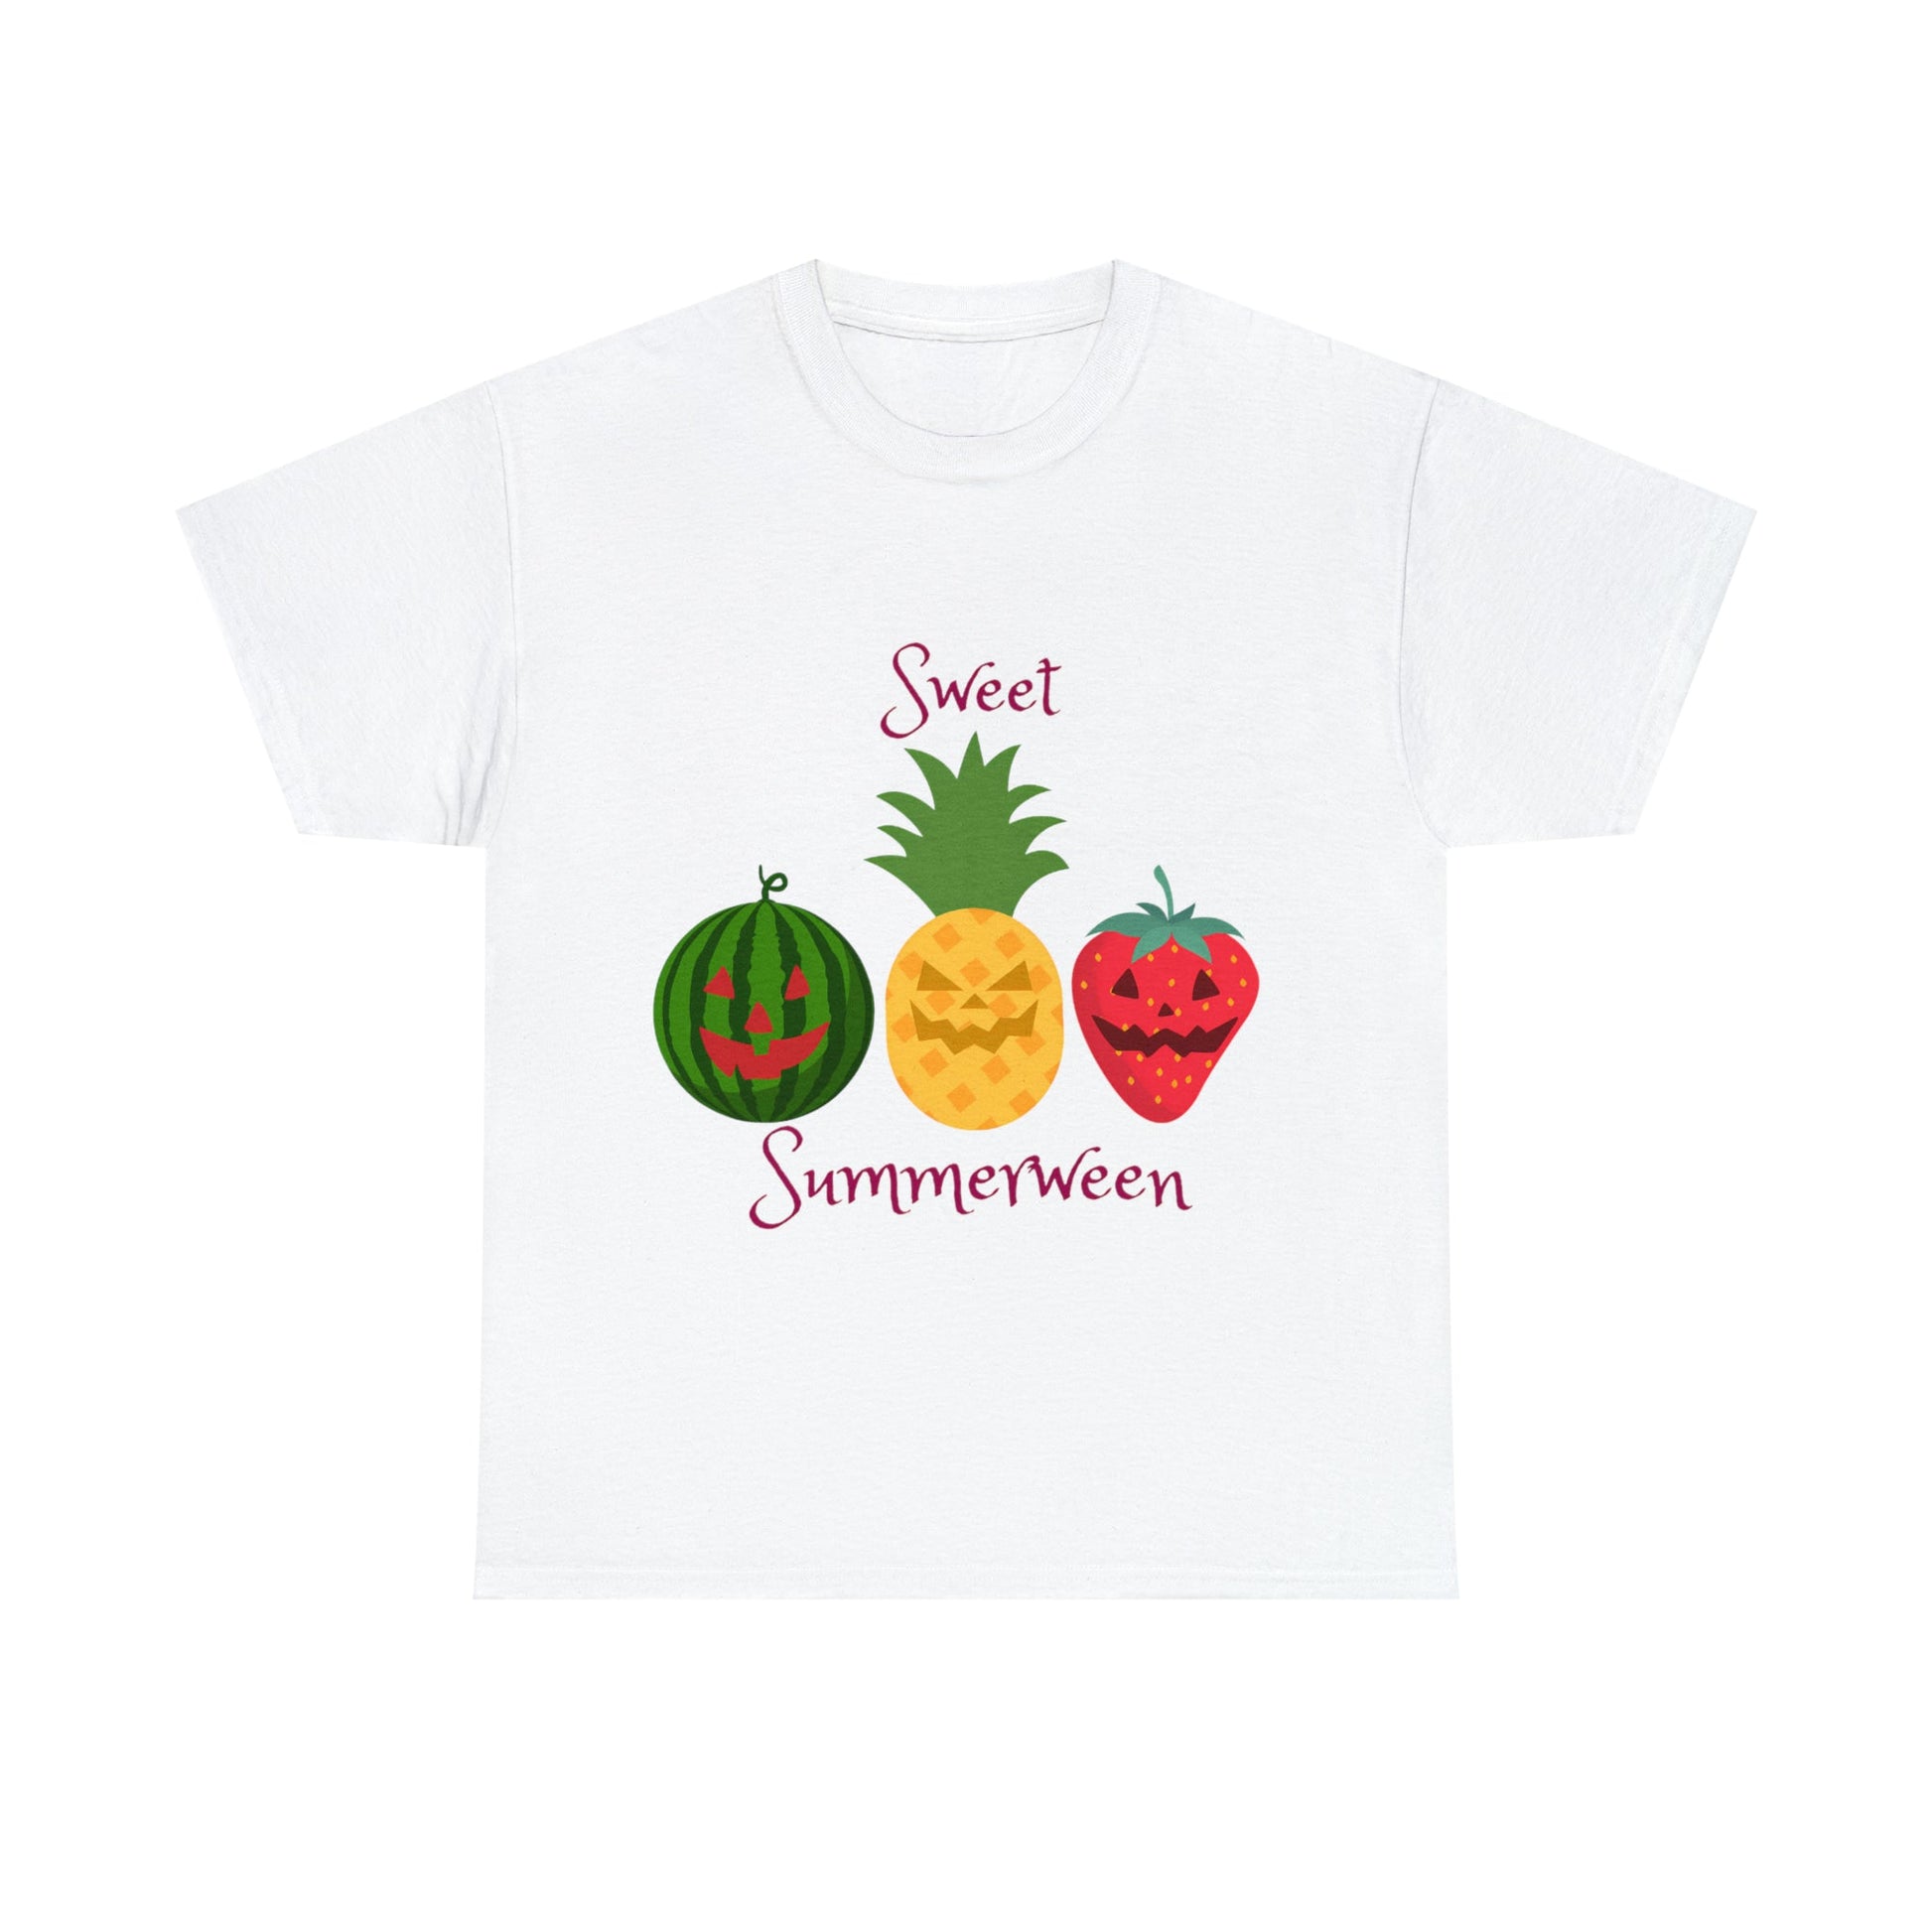 Sweet Summerween Shirt Tee Watermelon Pineapple Strawberry Jack o lantern FaceT - ShirtVTZdesignsWhiteSCrew neckDTGhalloween